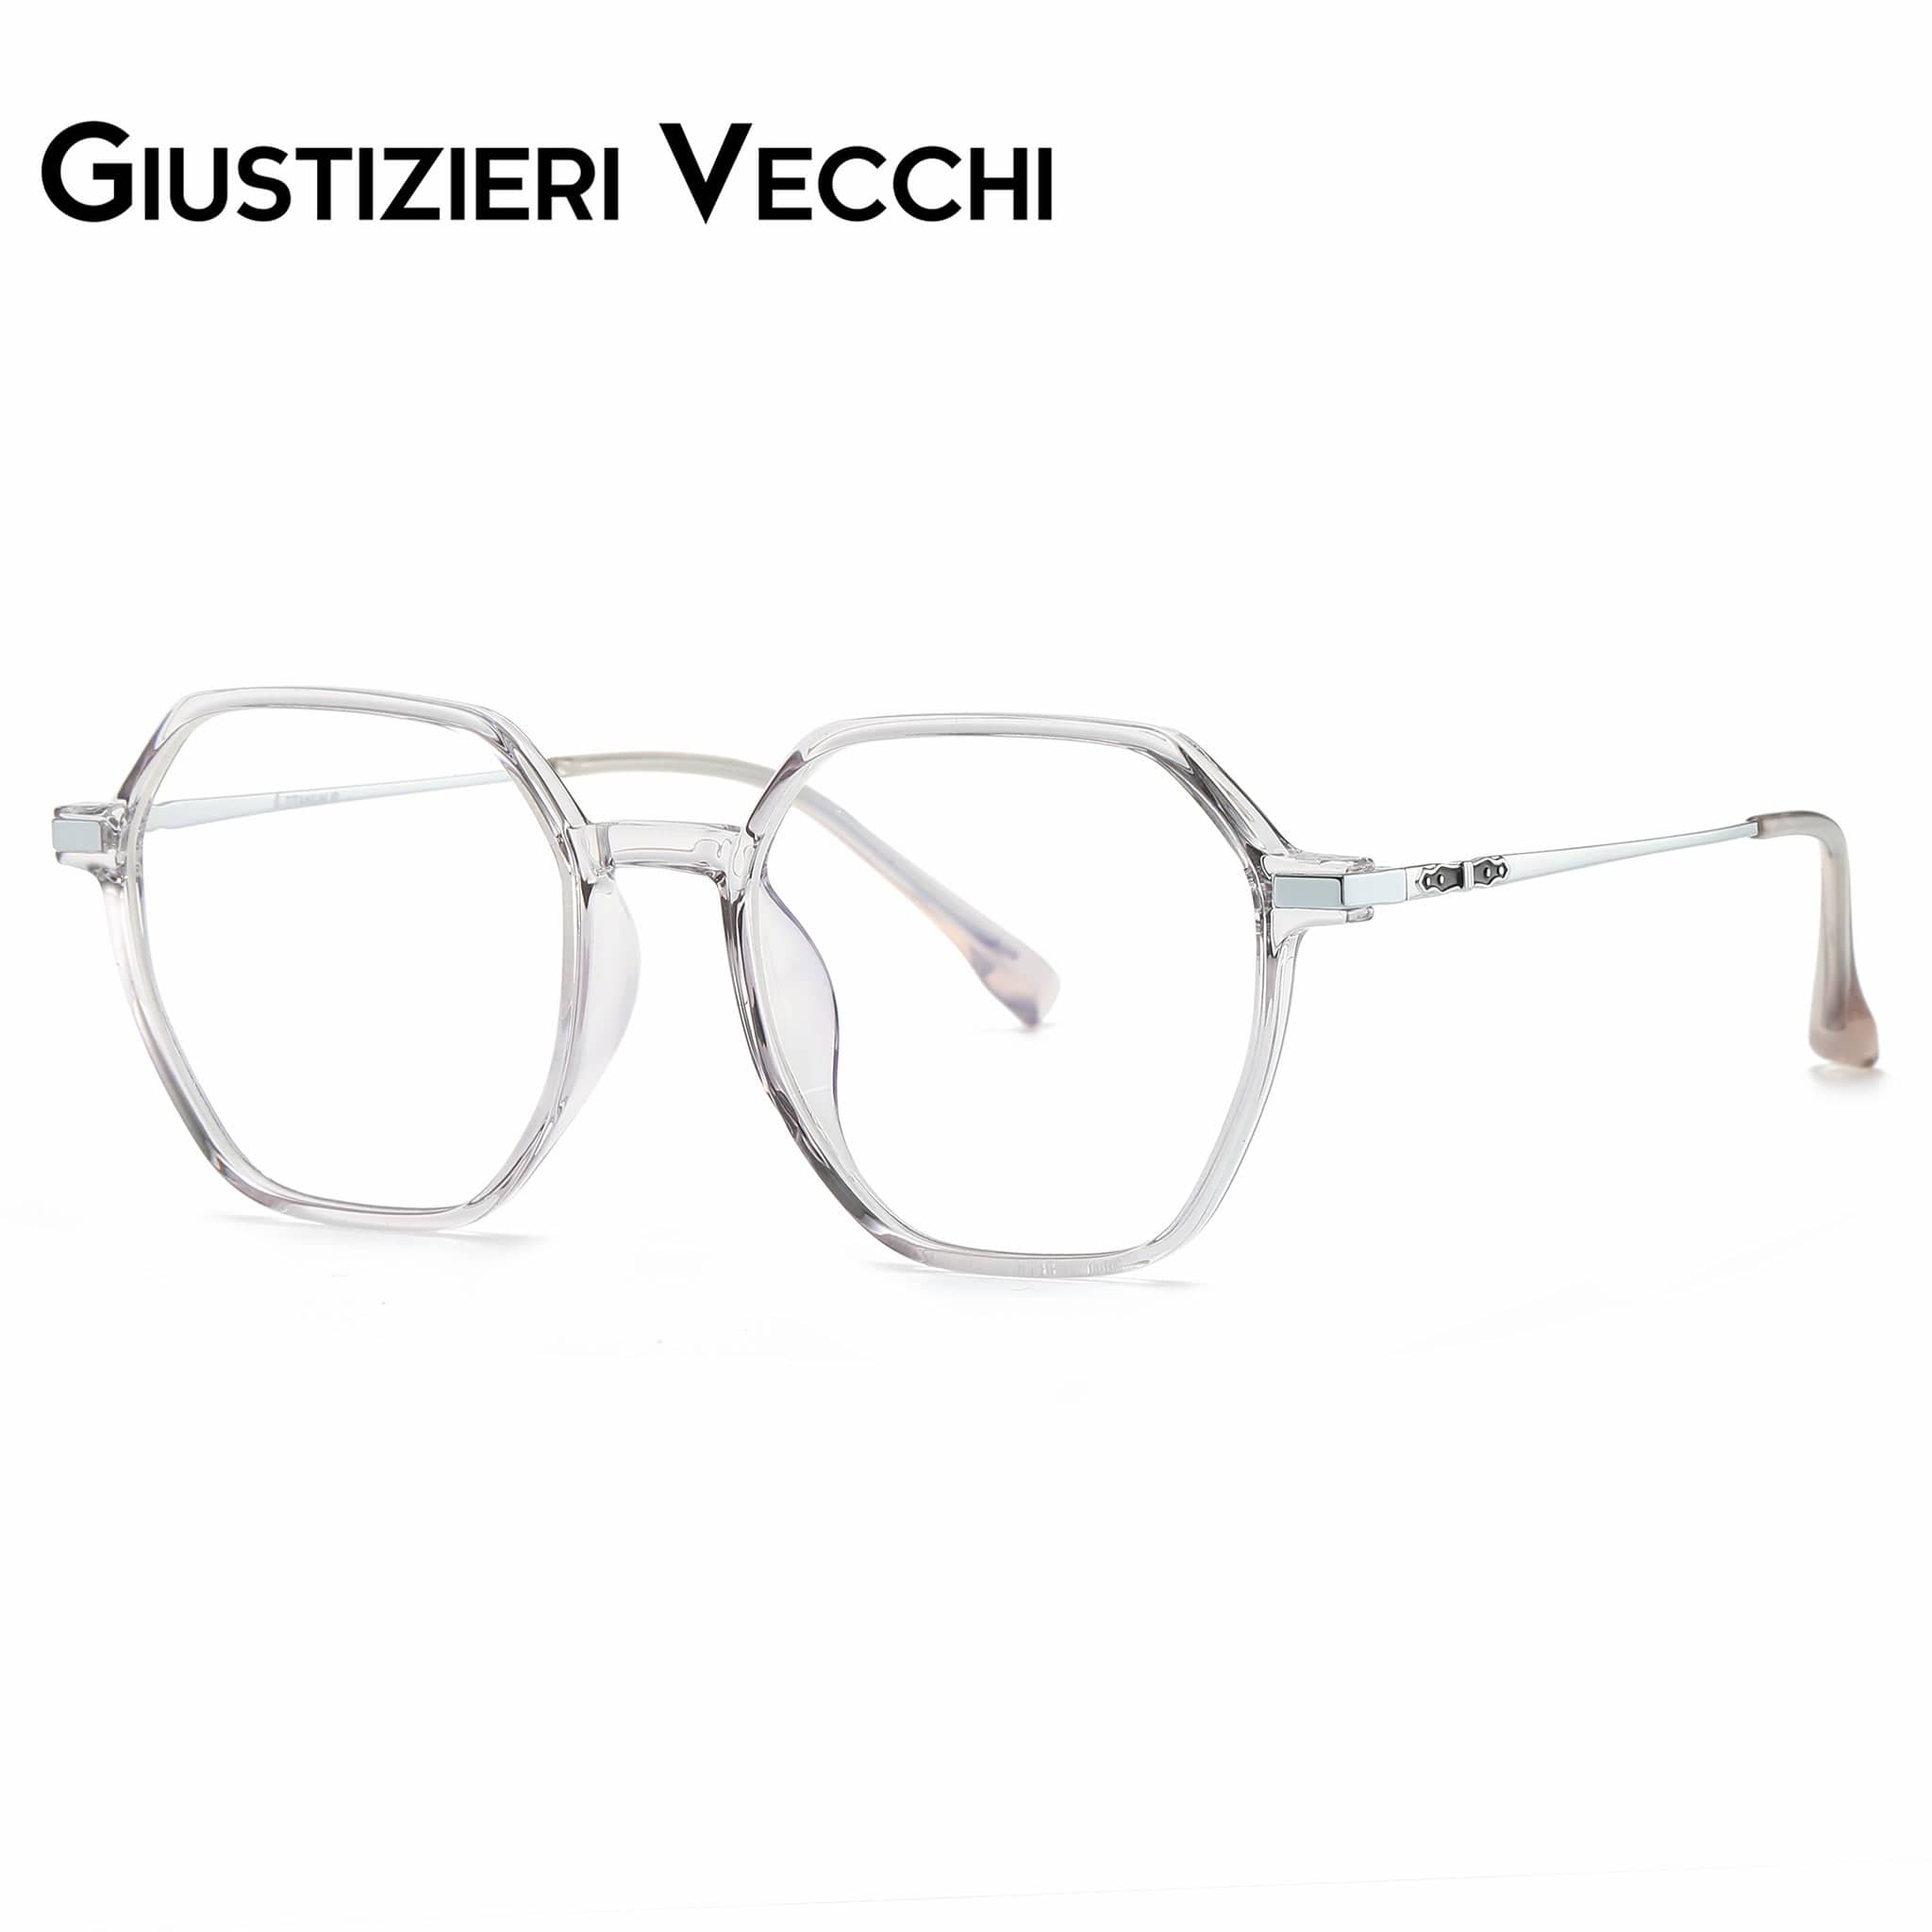 GIUSTIZIERI VECCHI Eyeglasses IceRider Duo